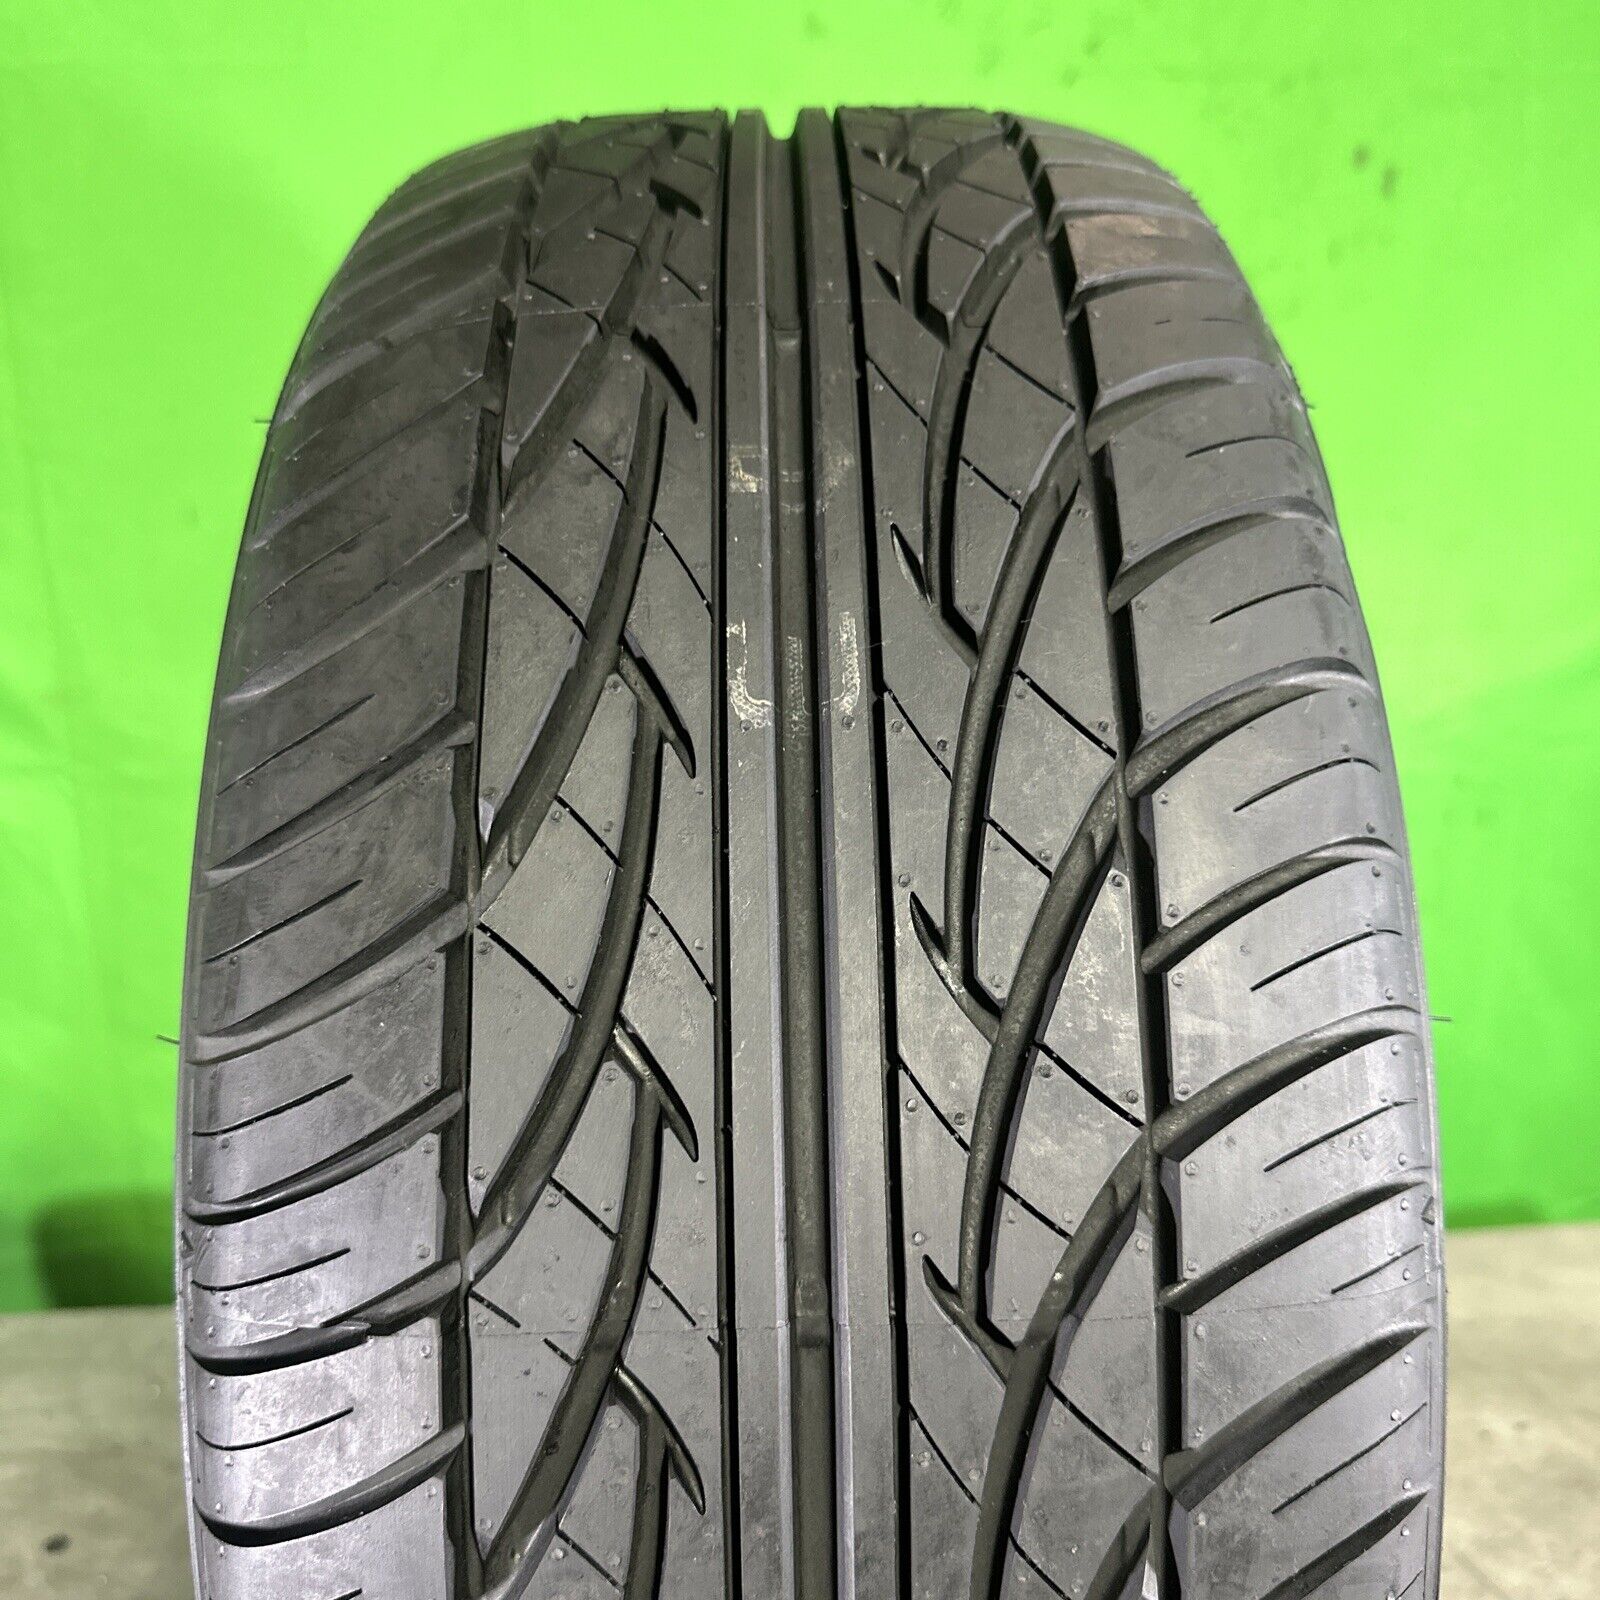 Single,New-(1 tire)225/50R16 Aspen Touring A/S 92V DOT 0318